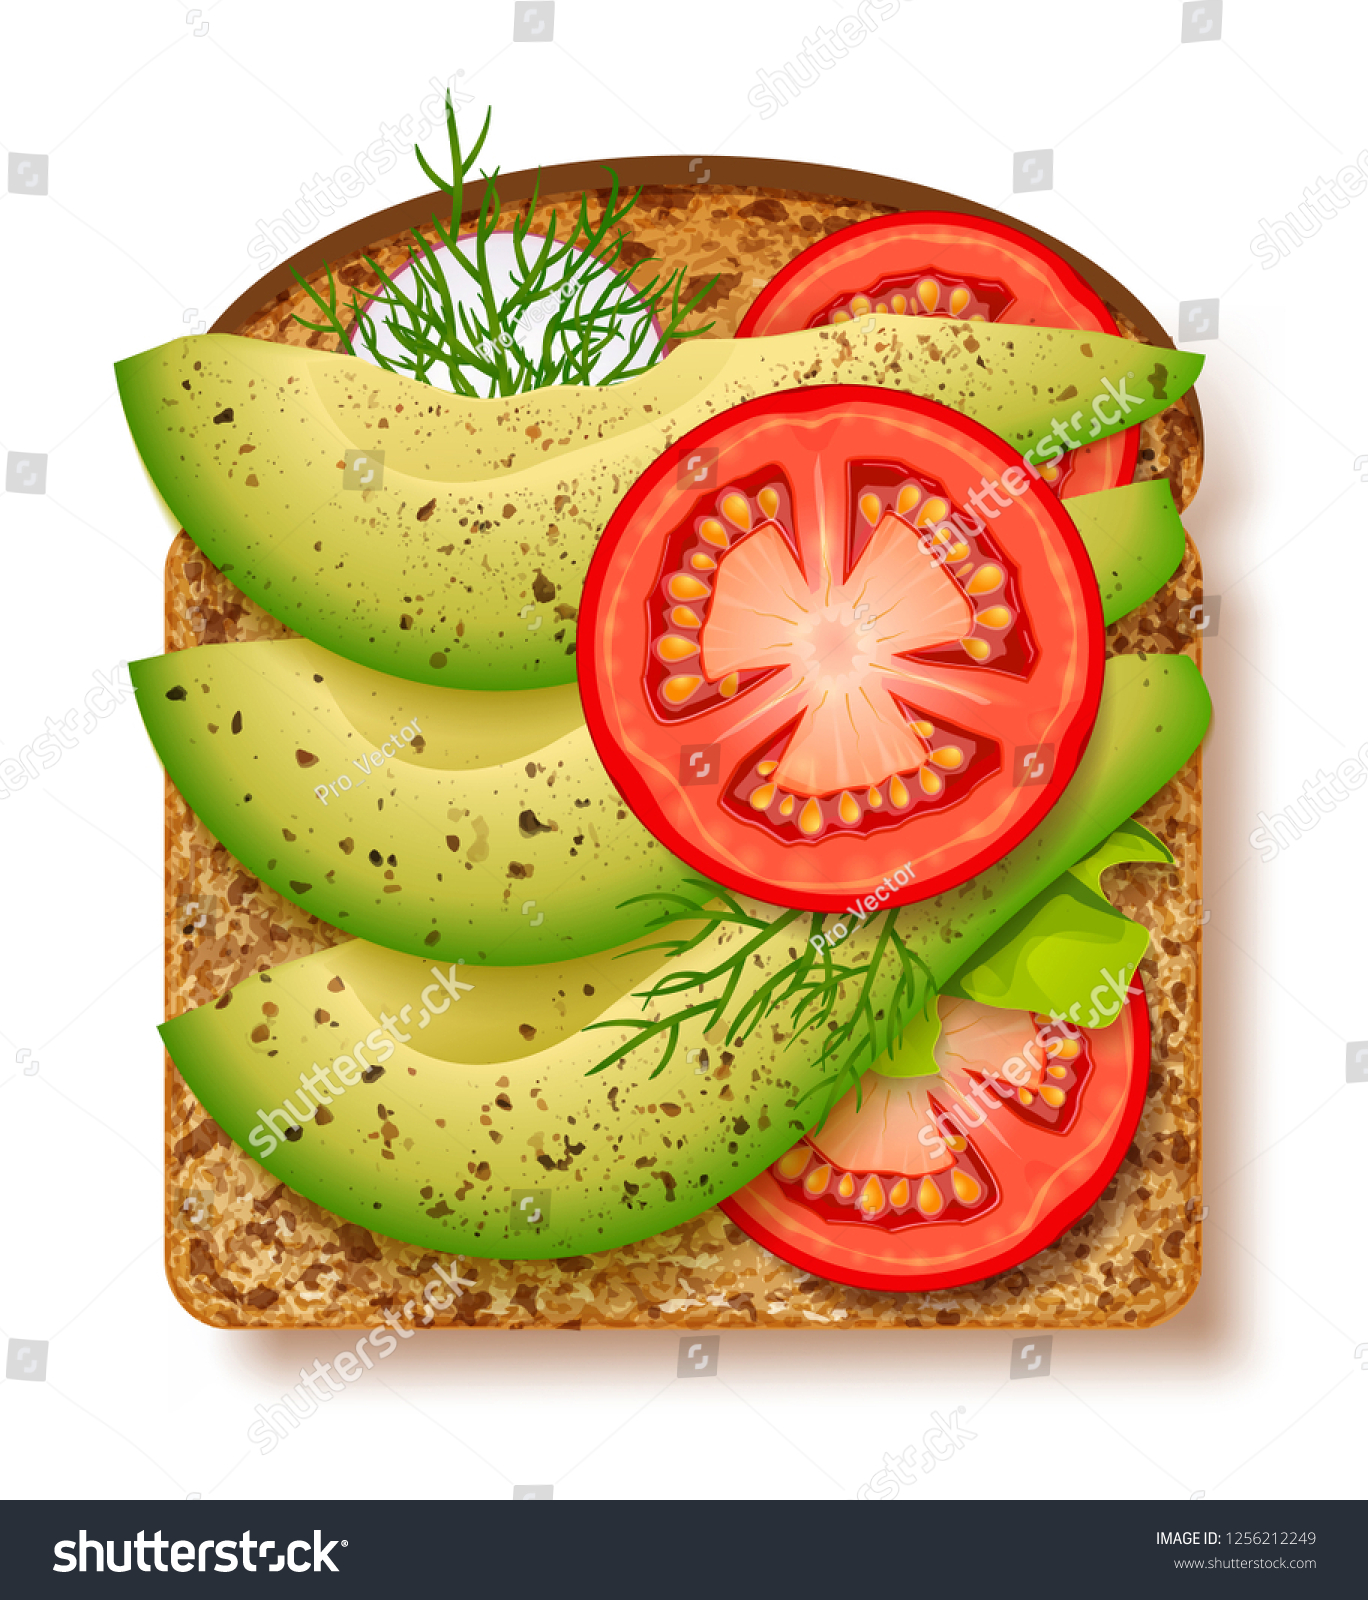 SVG of Avocado toast with fresh slices of ripe avocado, seasoning and dill, tomato and radish. Delicious avocado sandwich. Vector illustration svg